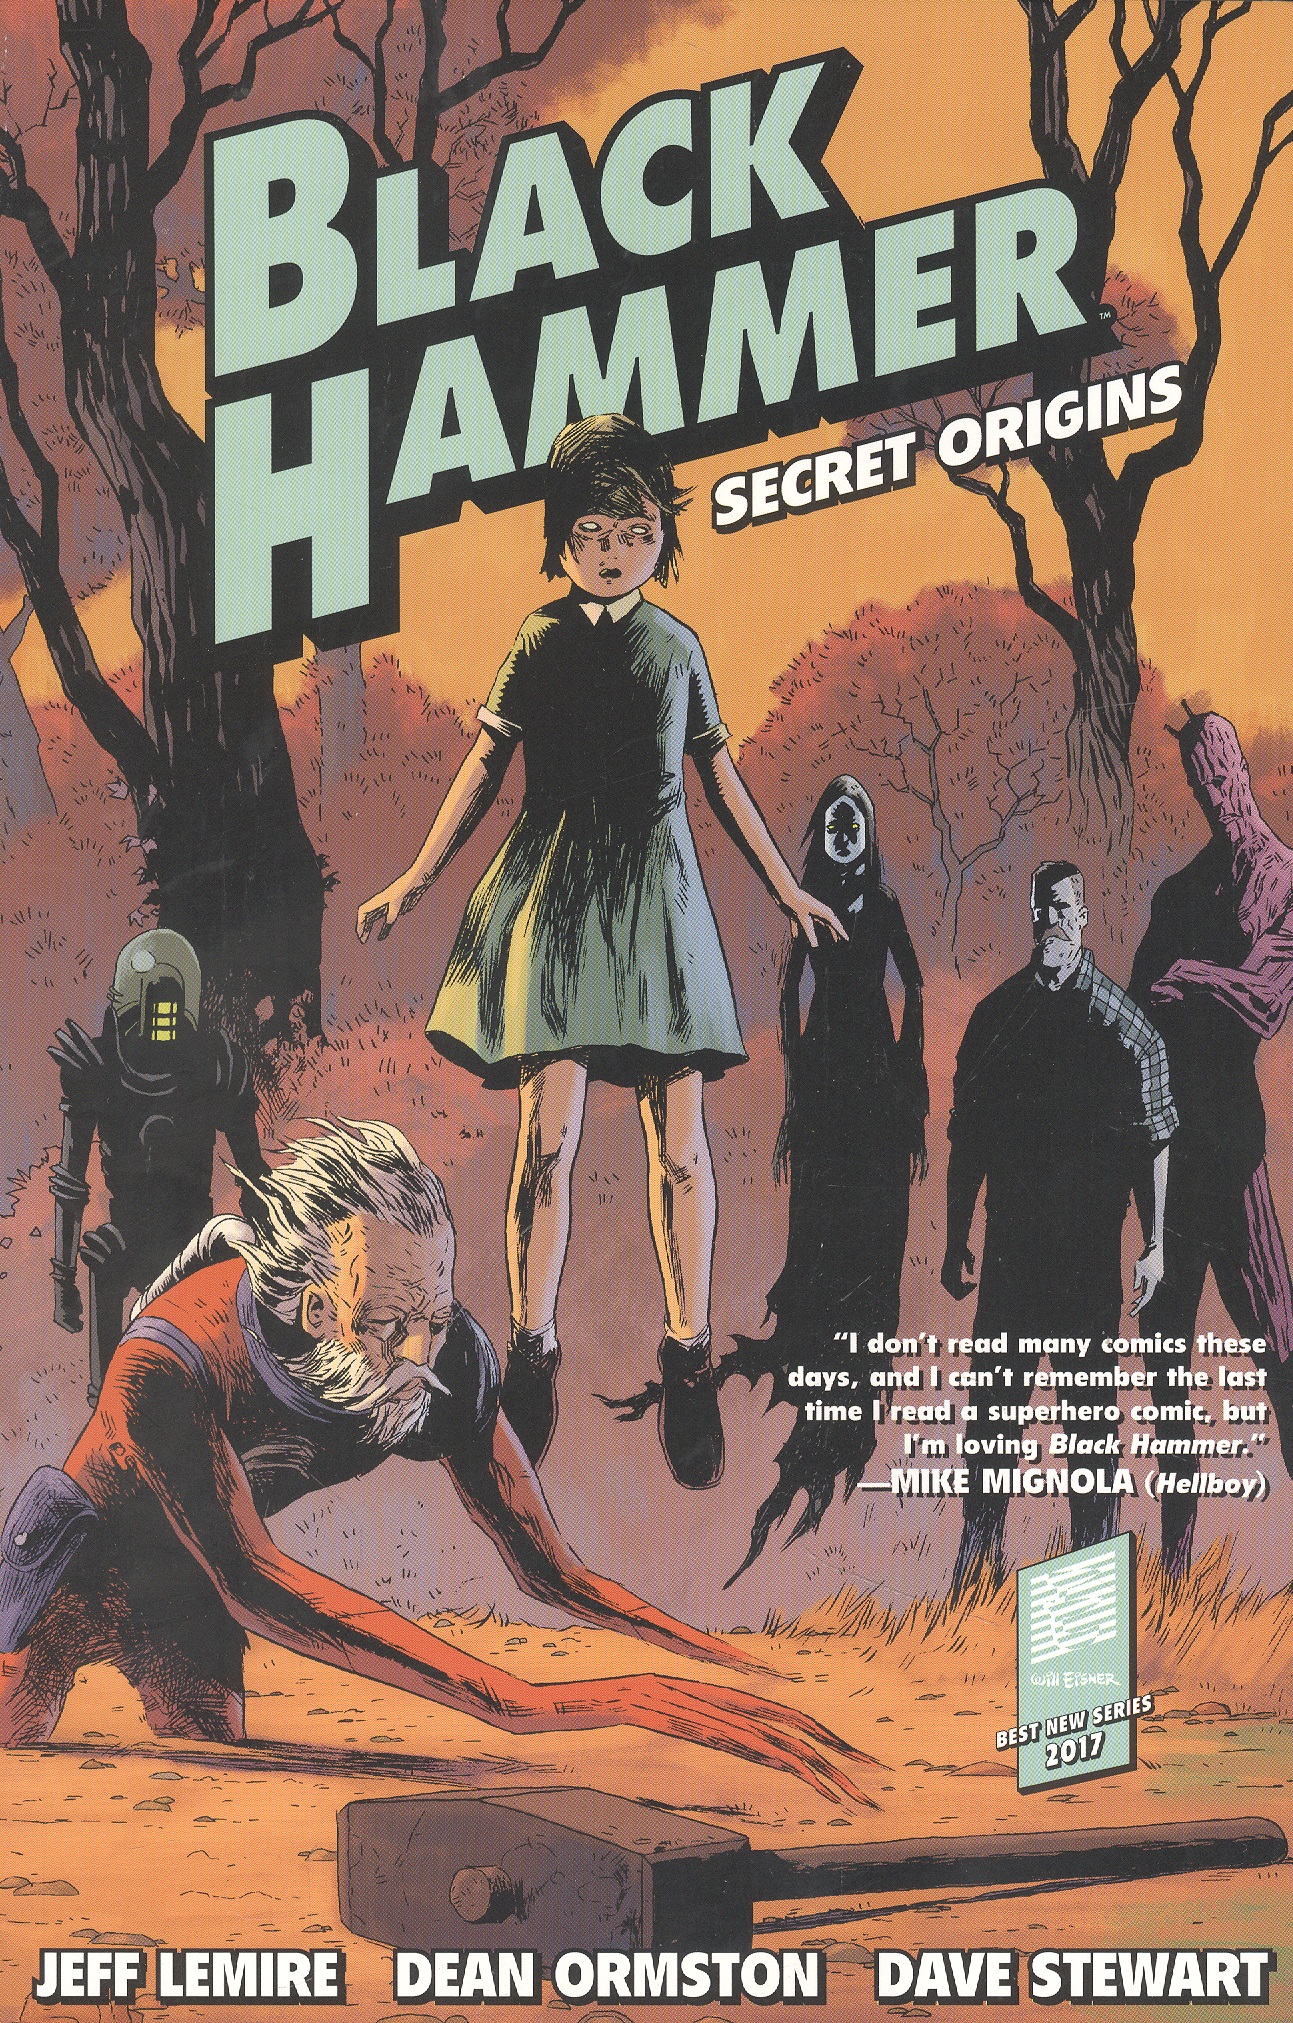 Лемир Джефф Black Hammer: Secret Origins lemire jeff black hammer vol 3